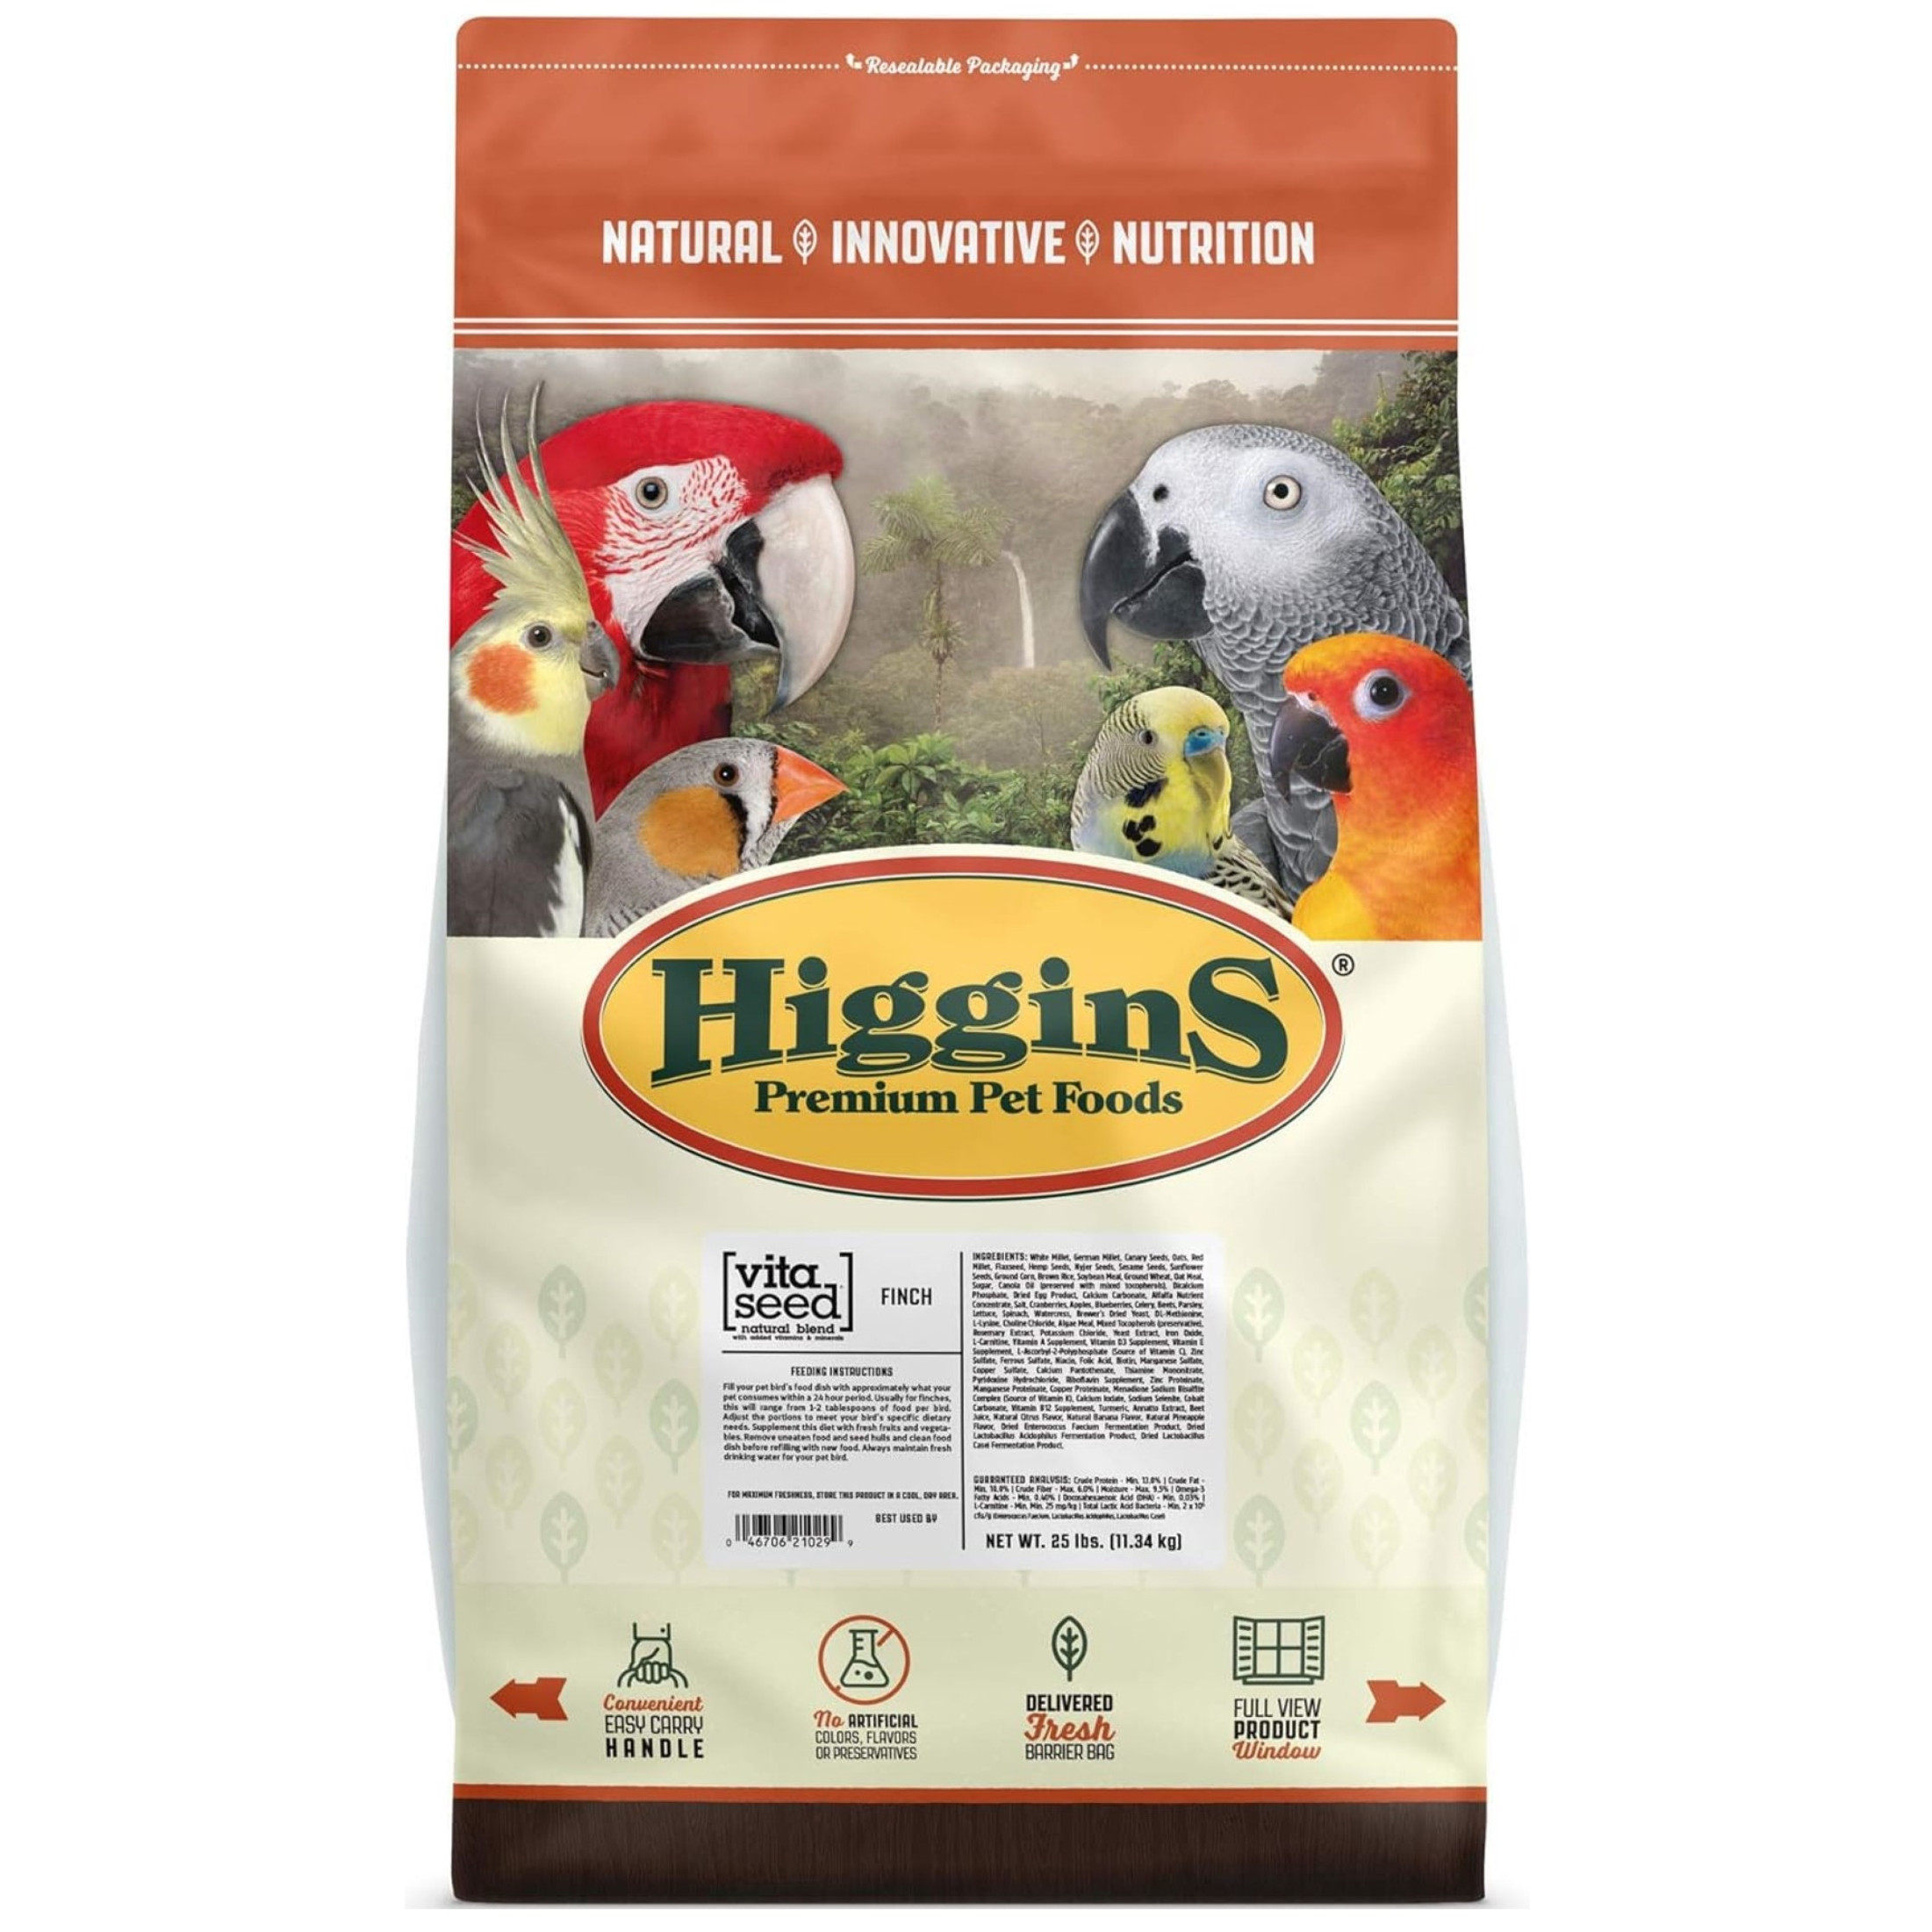 Higgins Vita Seed Finch Food for Wild Birds, 25lb